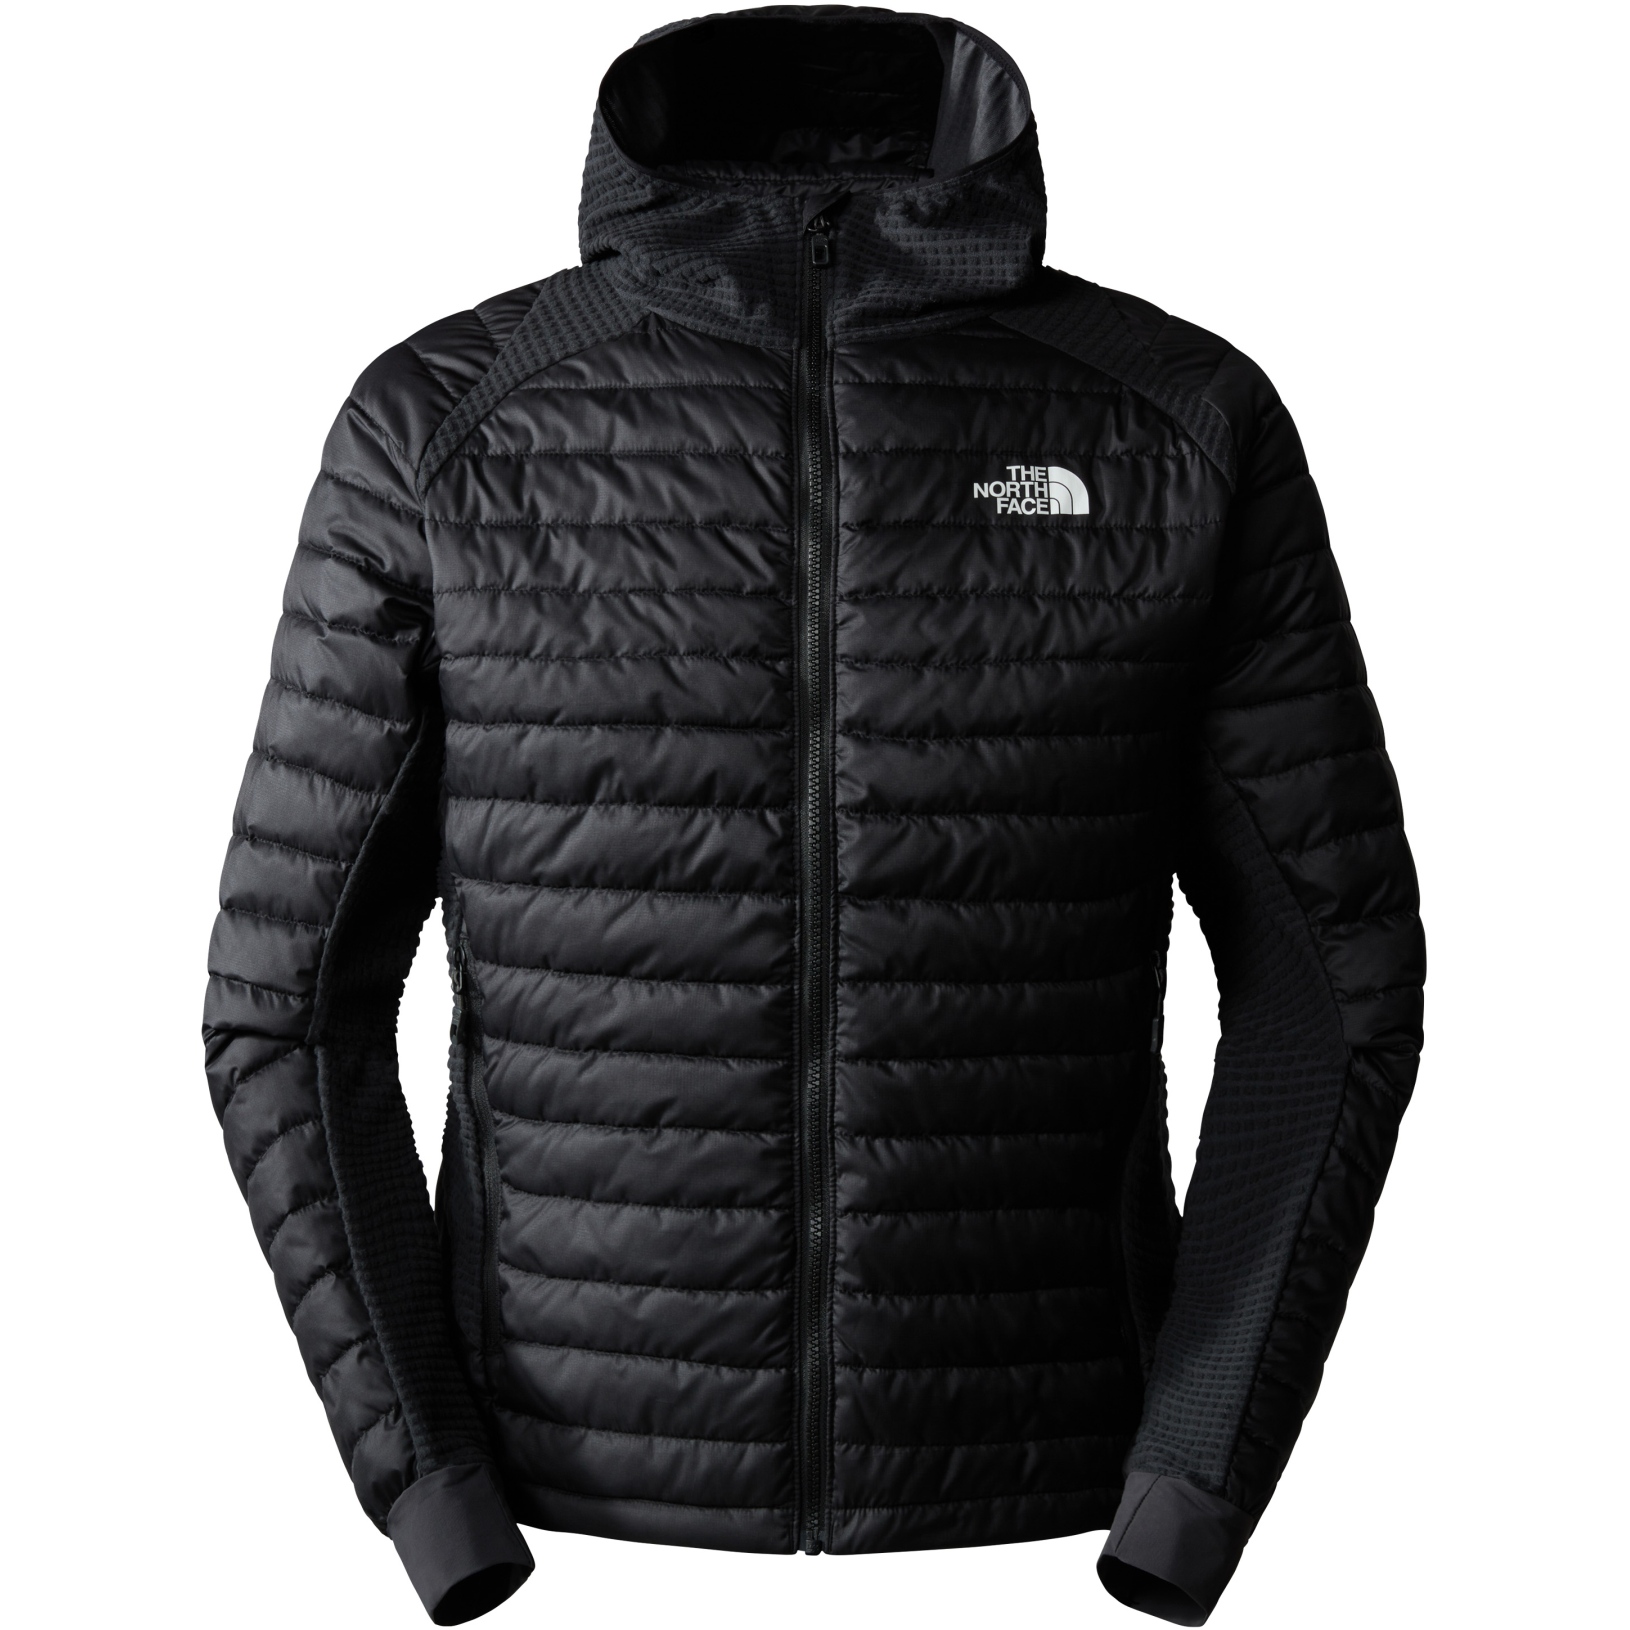 The North Face Men's Hybrid Insulation Jacket - TNF Black/Asphalt Grey